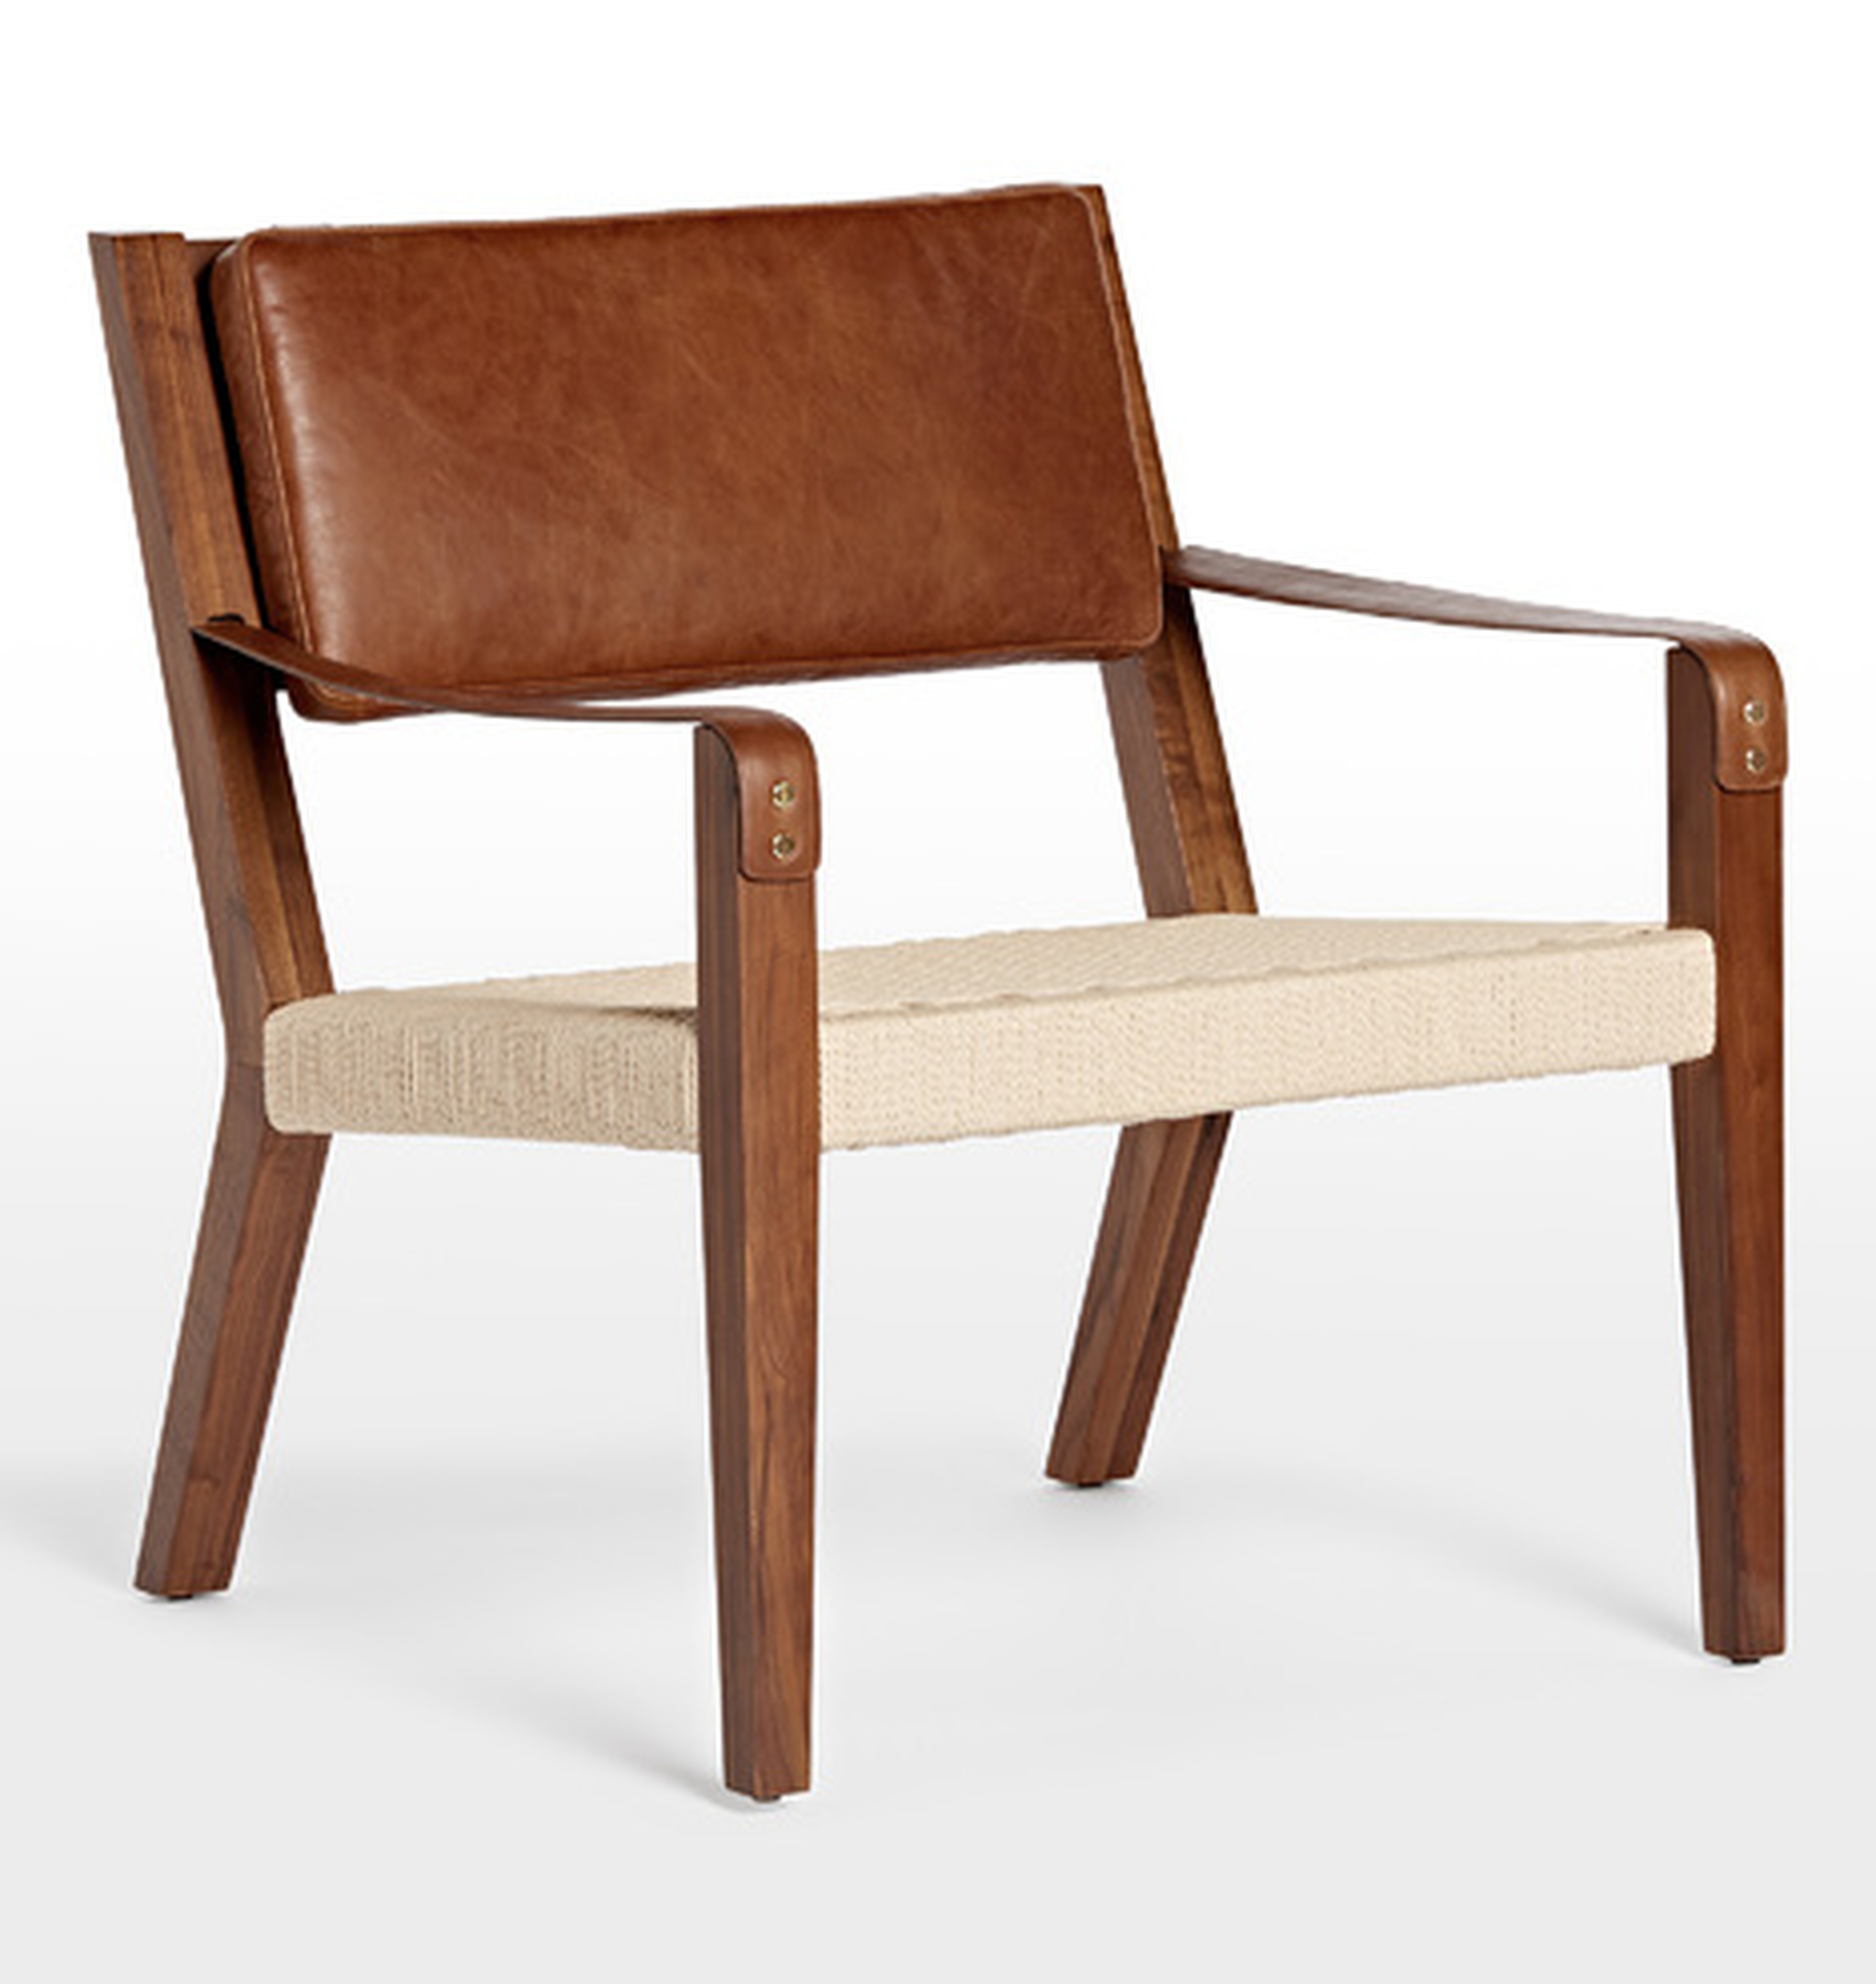 Shaw Walnut & Leather Lounge Chair - Rejuvenation